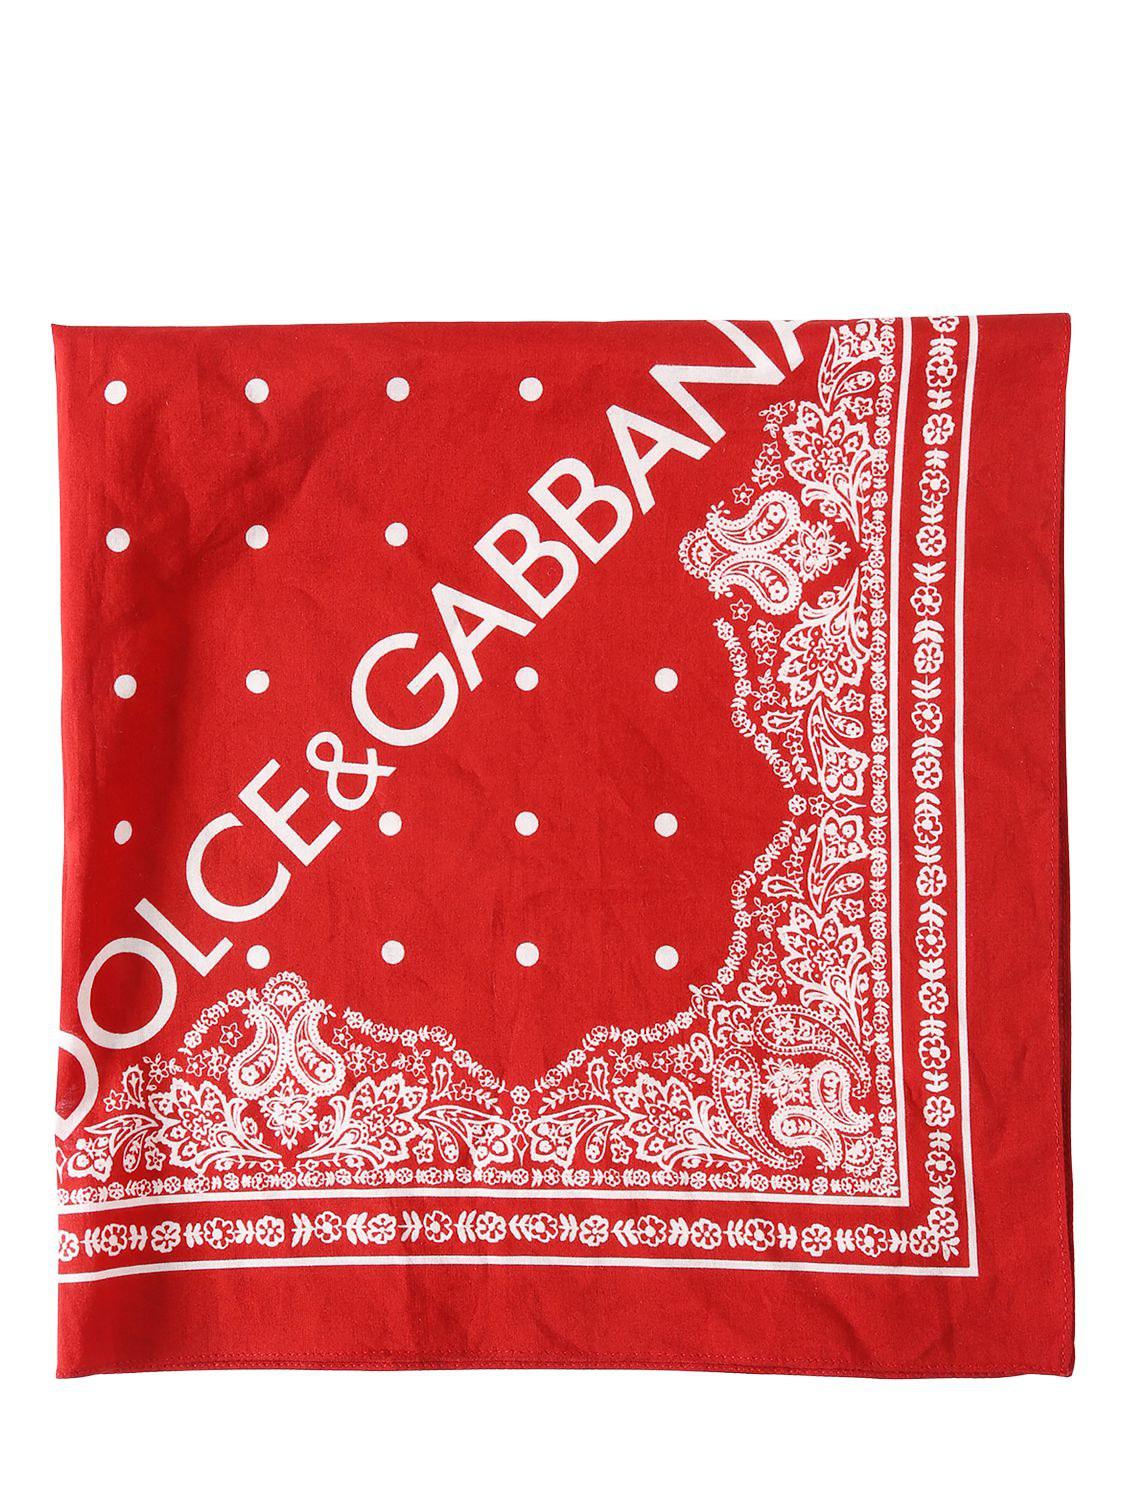 Dolce & Gabbana Logo Printed Cotton Bandana in Red for Men - Lyst